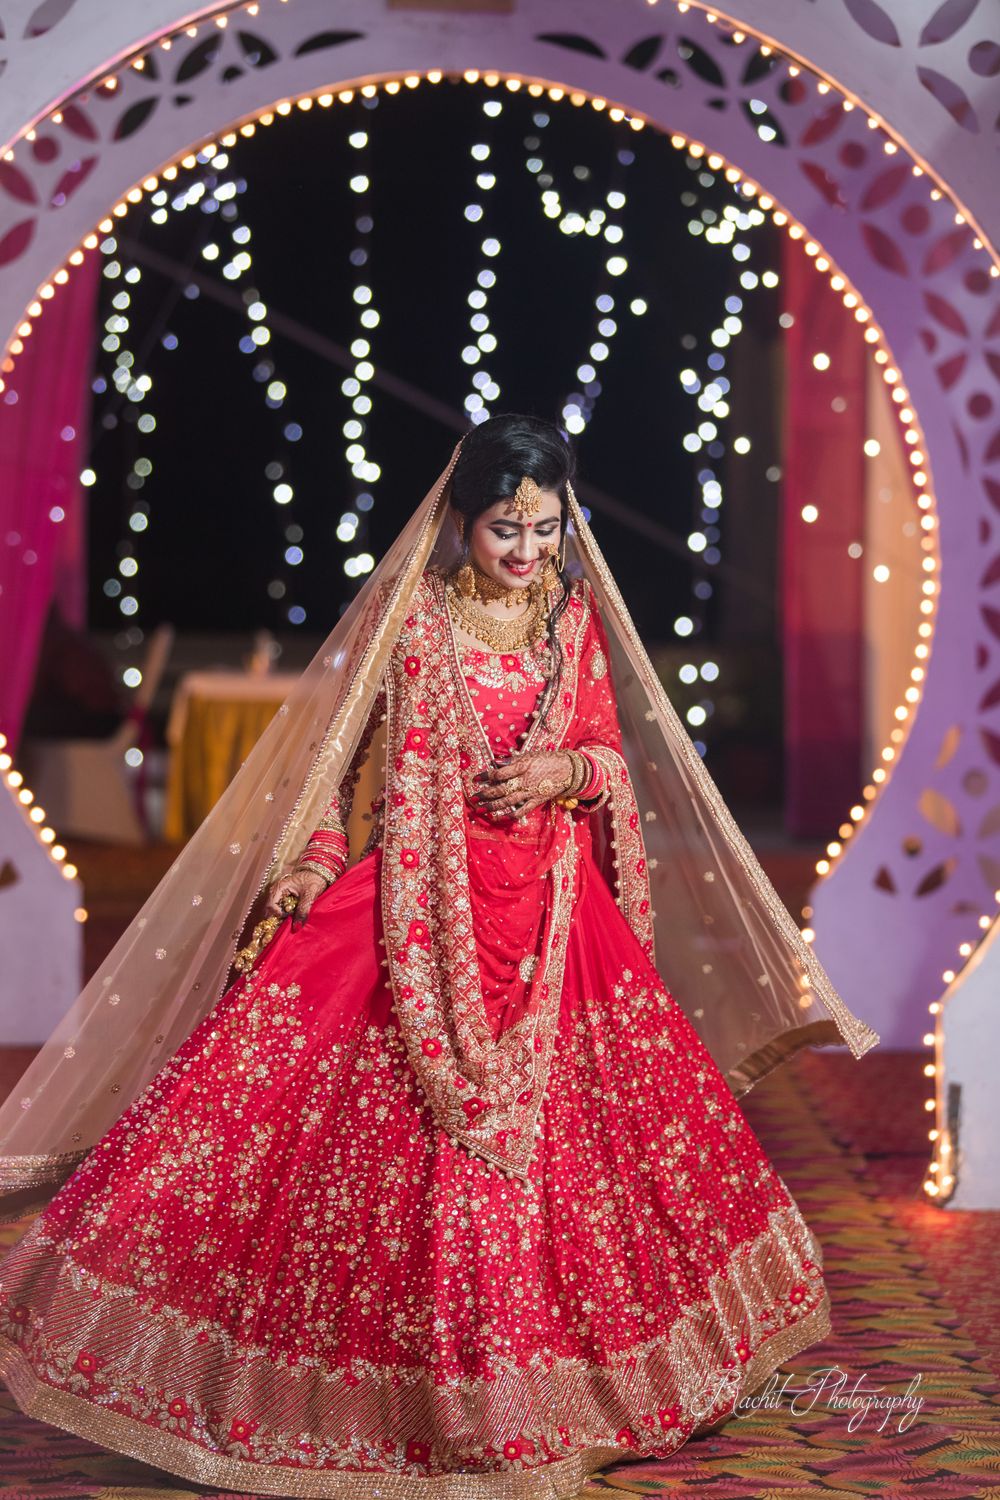 Photo of Red and gold bridal lehenga